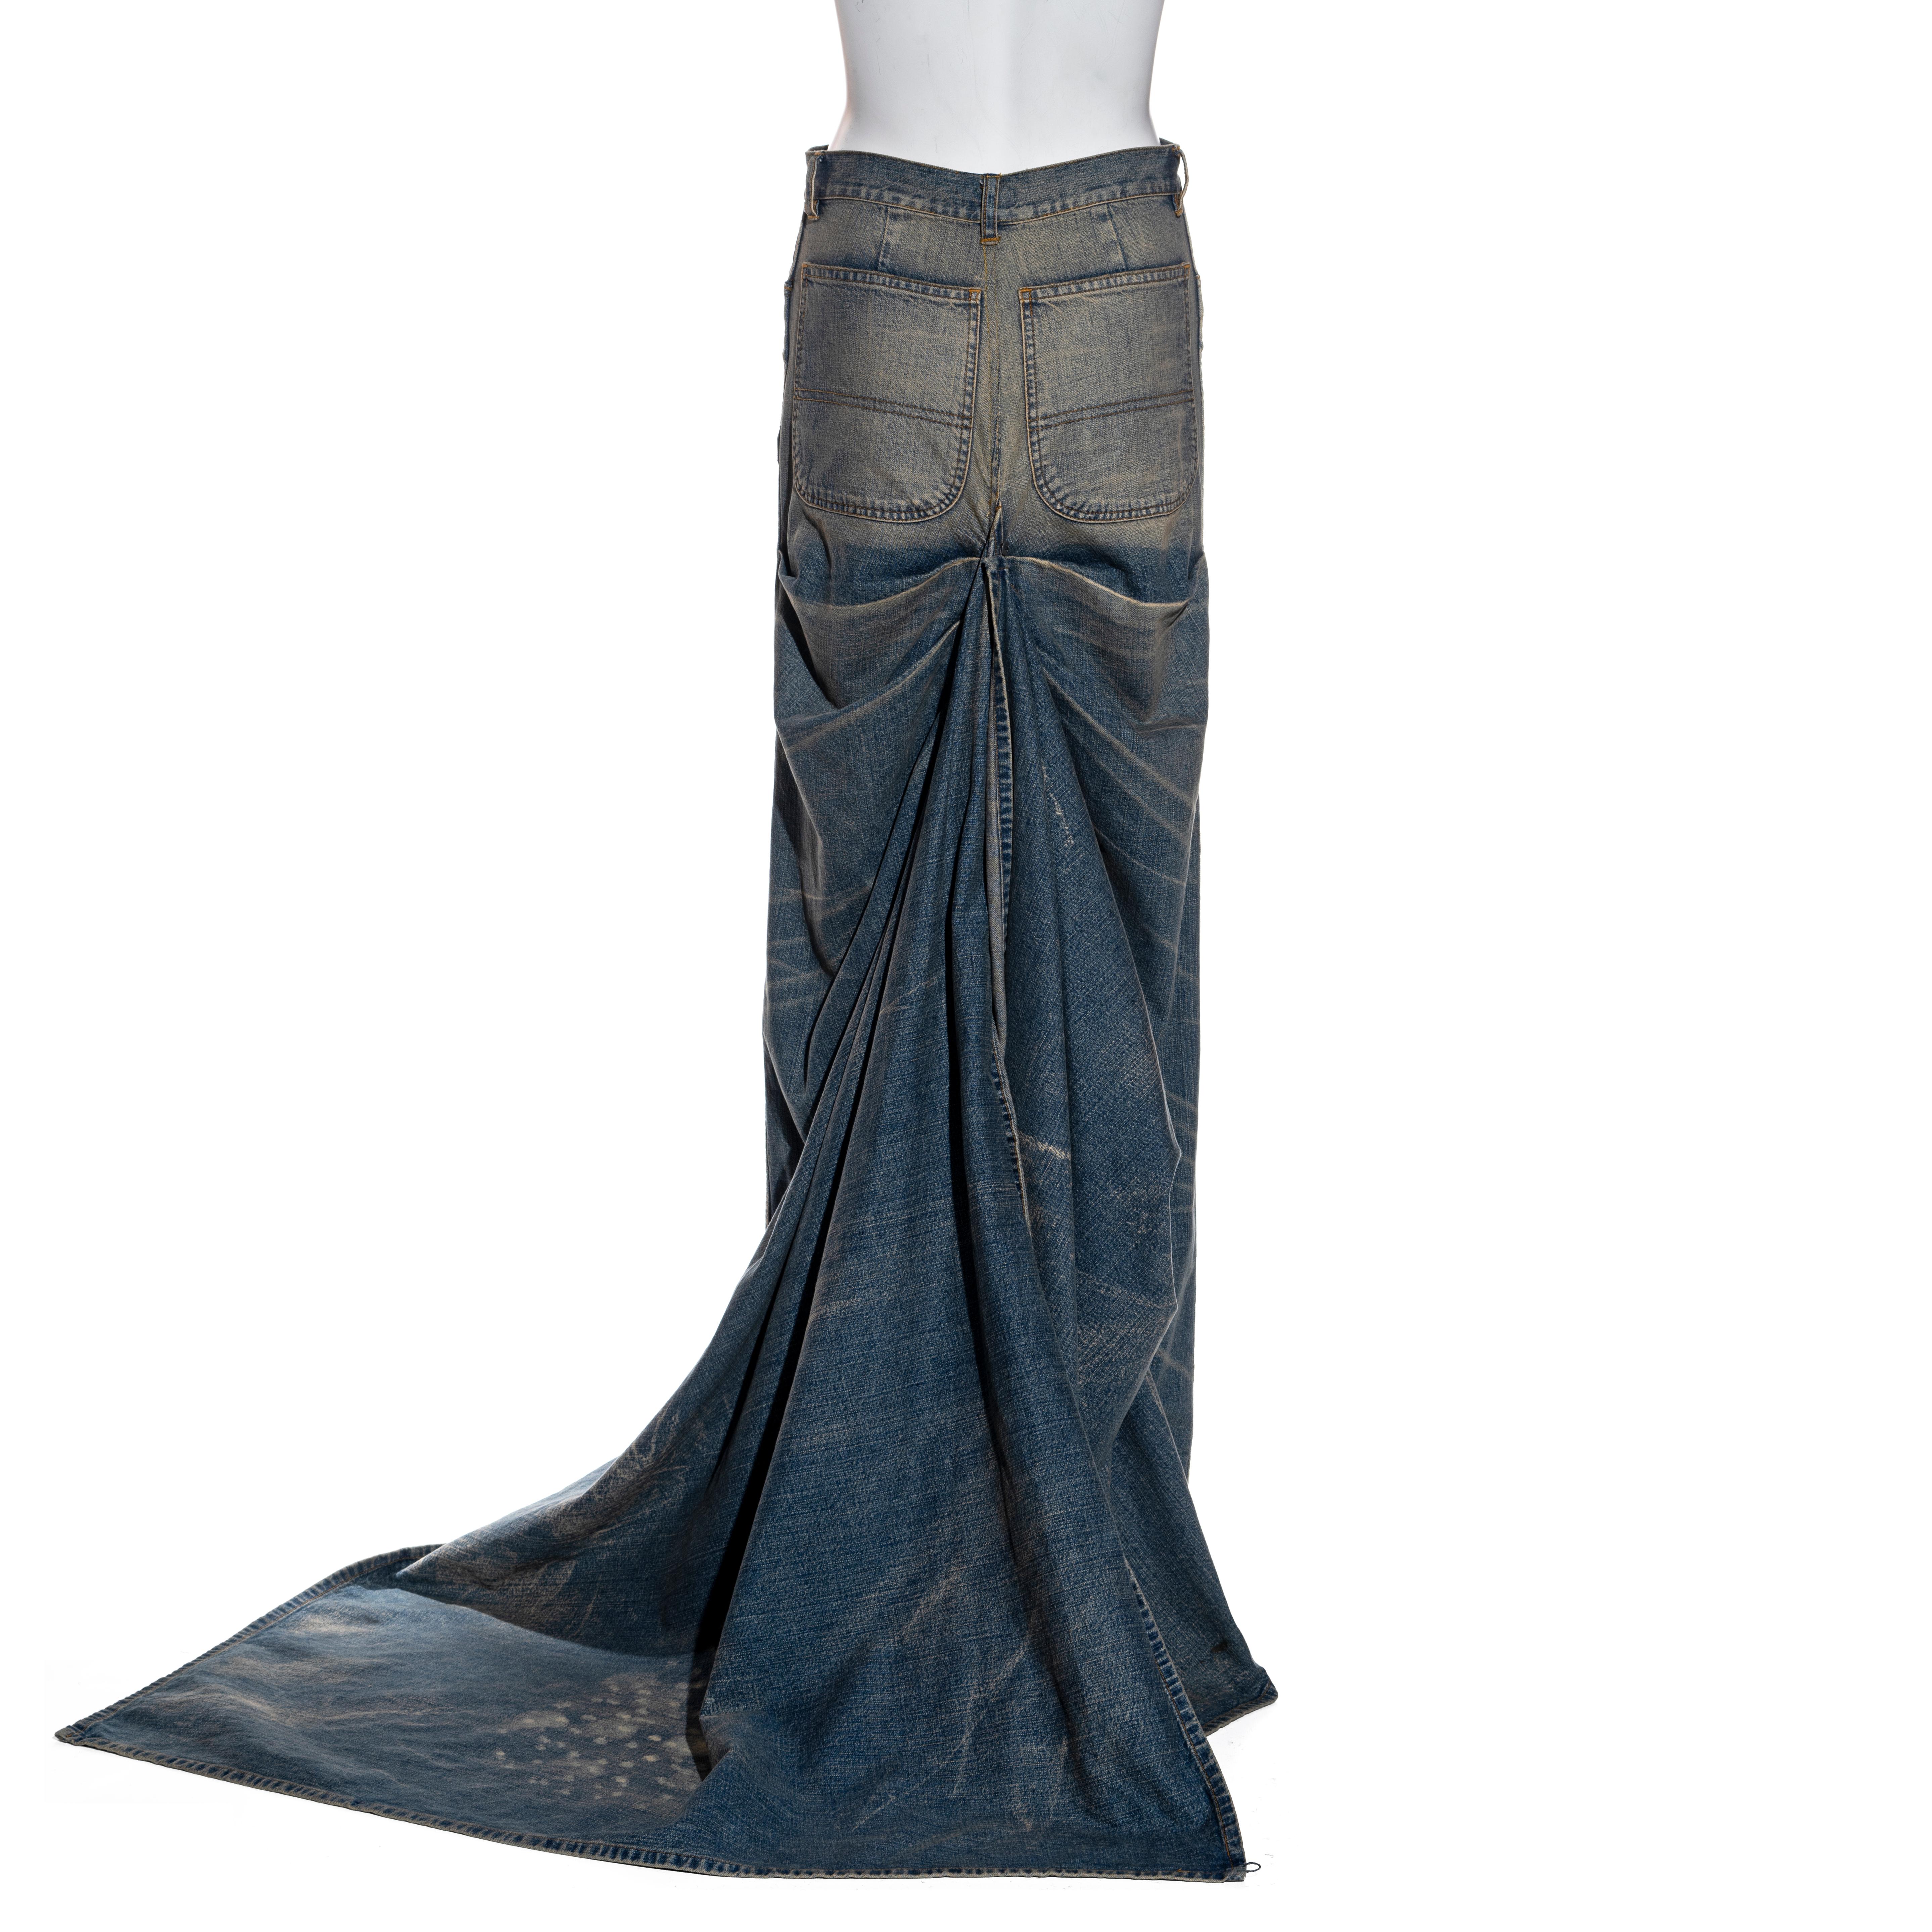 Ralph Lauren distressed denim floor-length bustle skirt with train